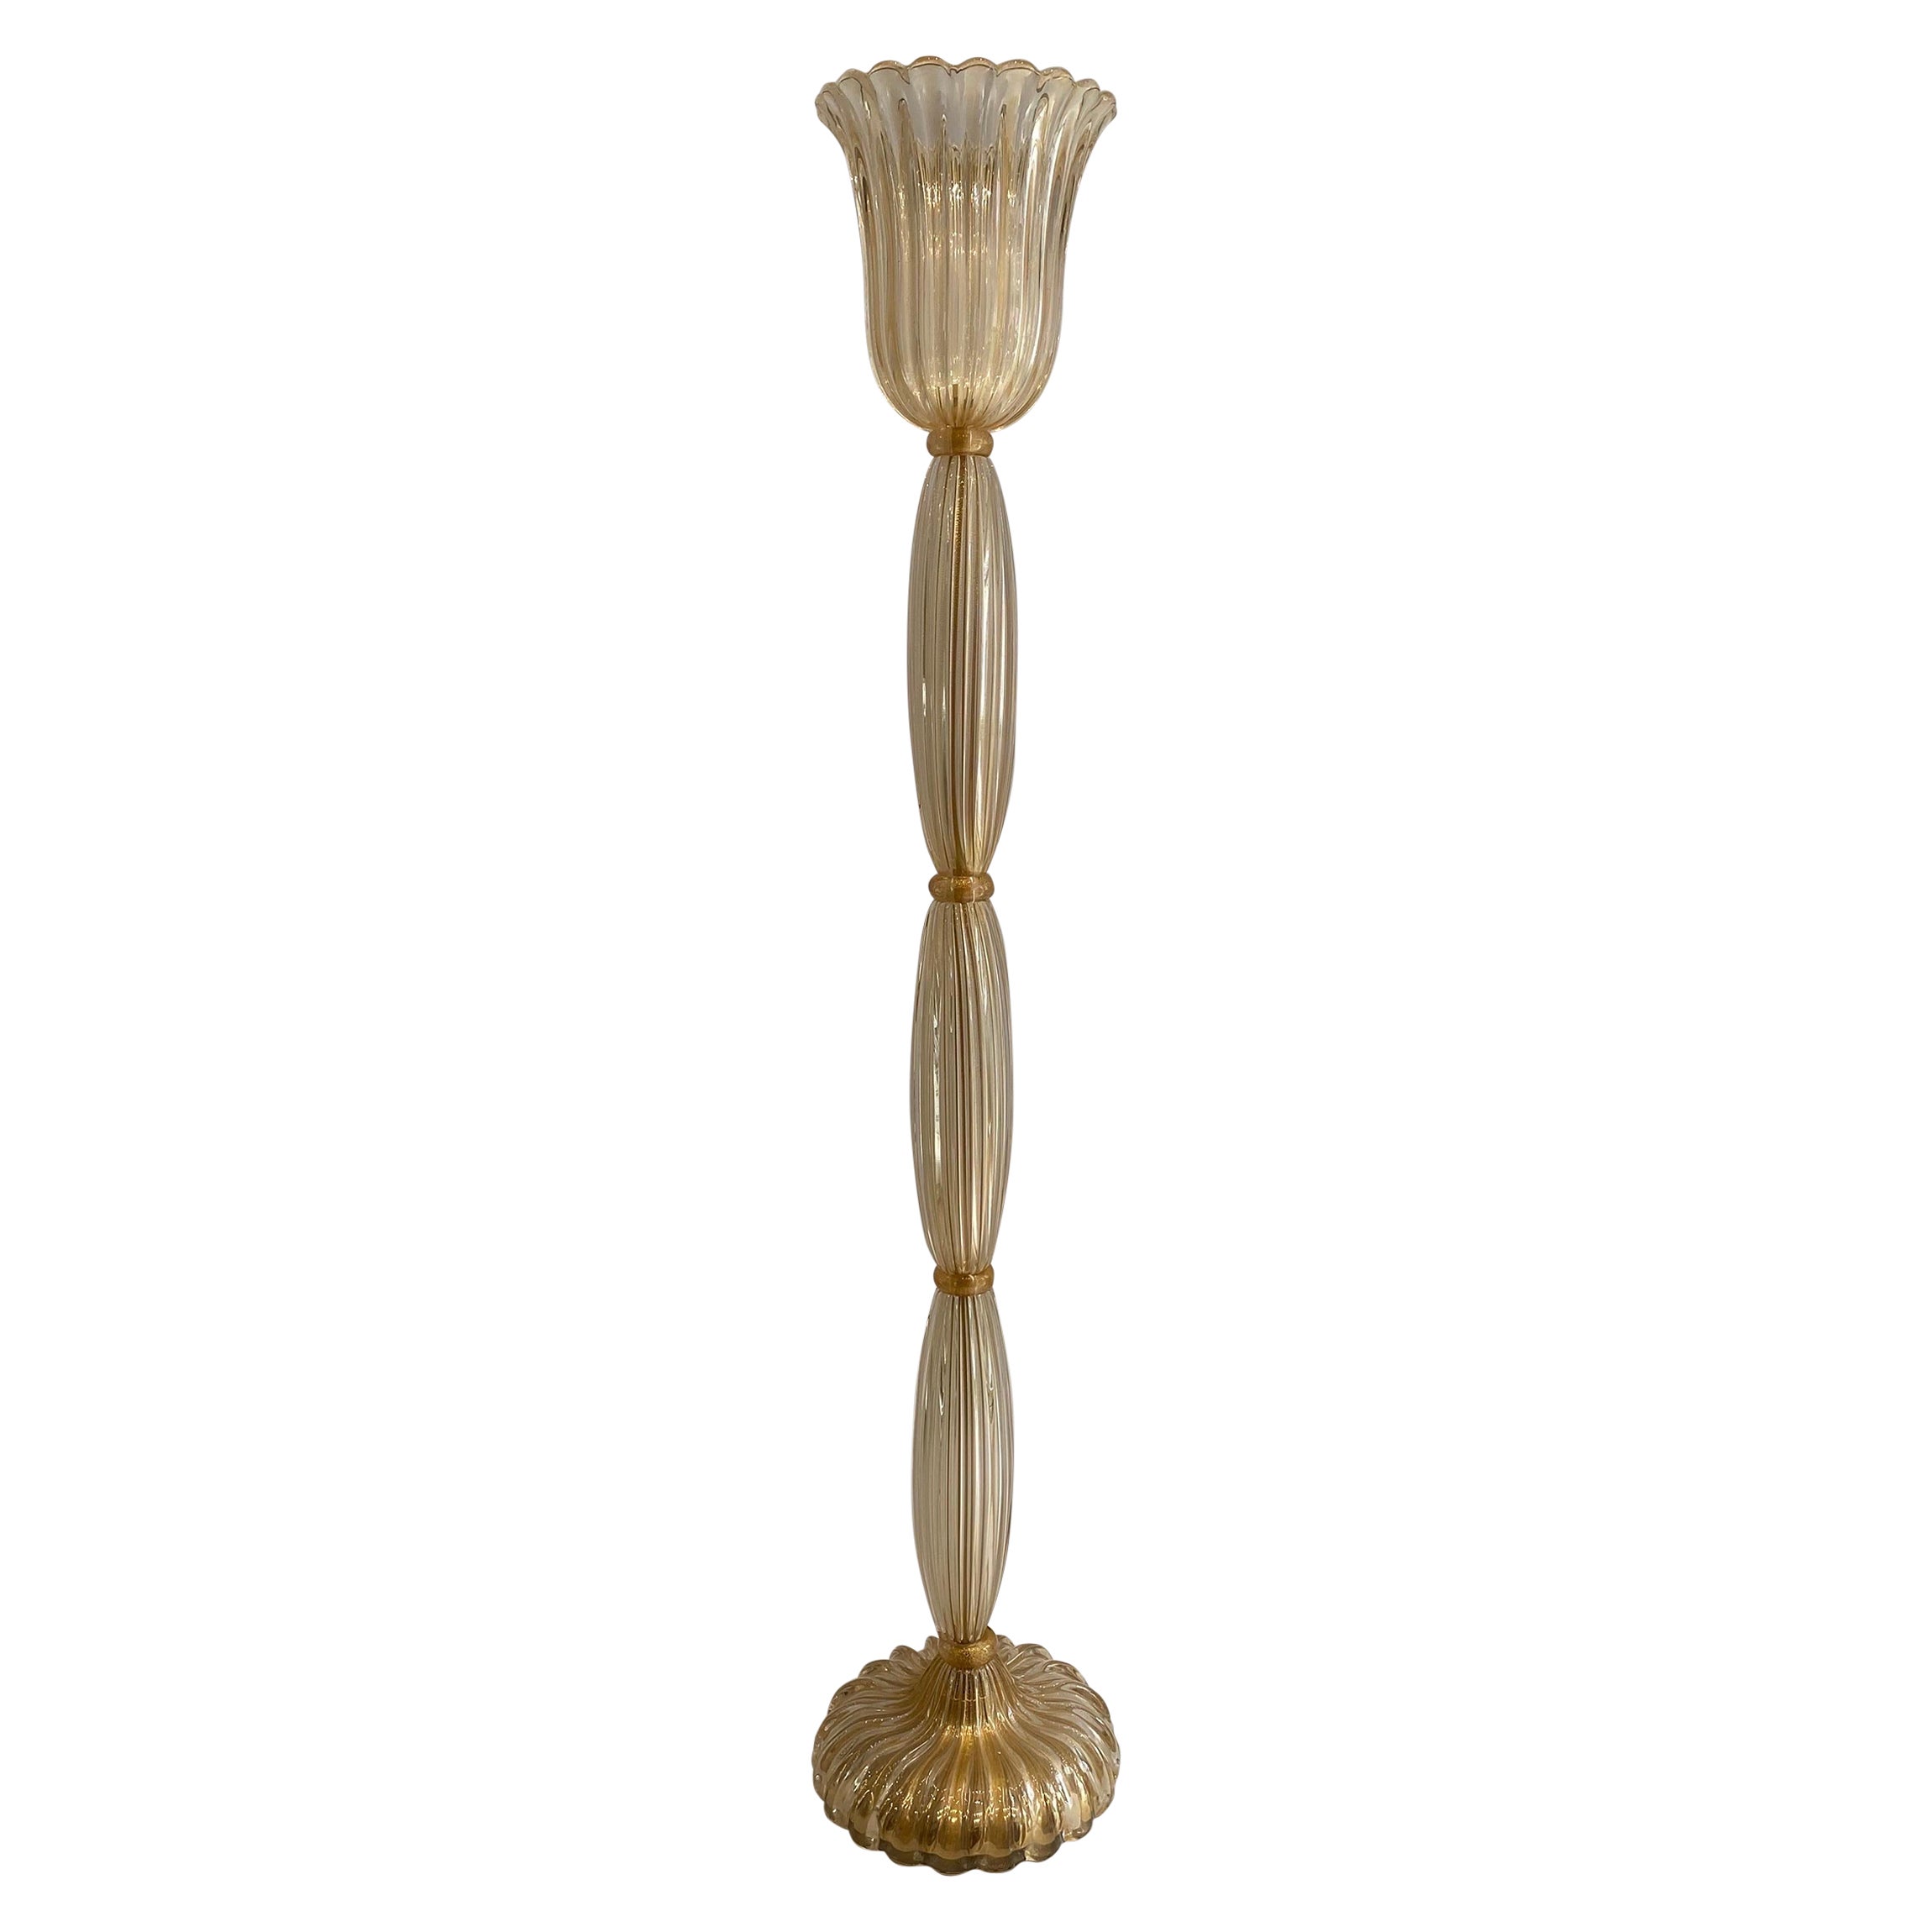 Signiert Archimede Seguso Murano Glas Stehlampe Gold Italienisch Art Deco 1980s